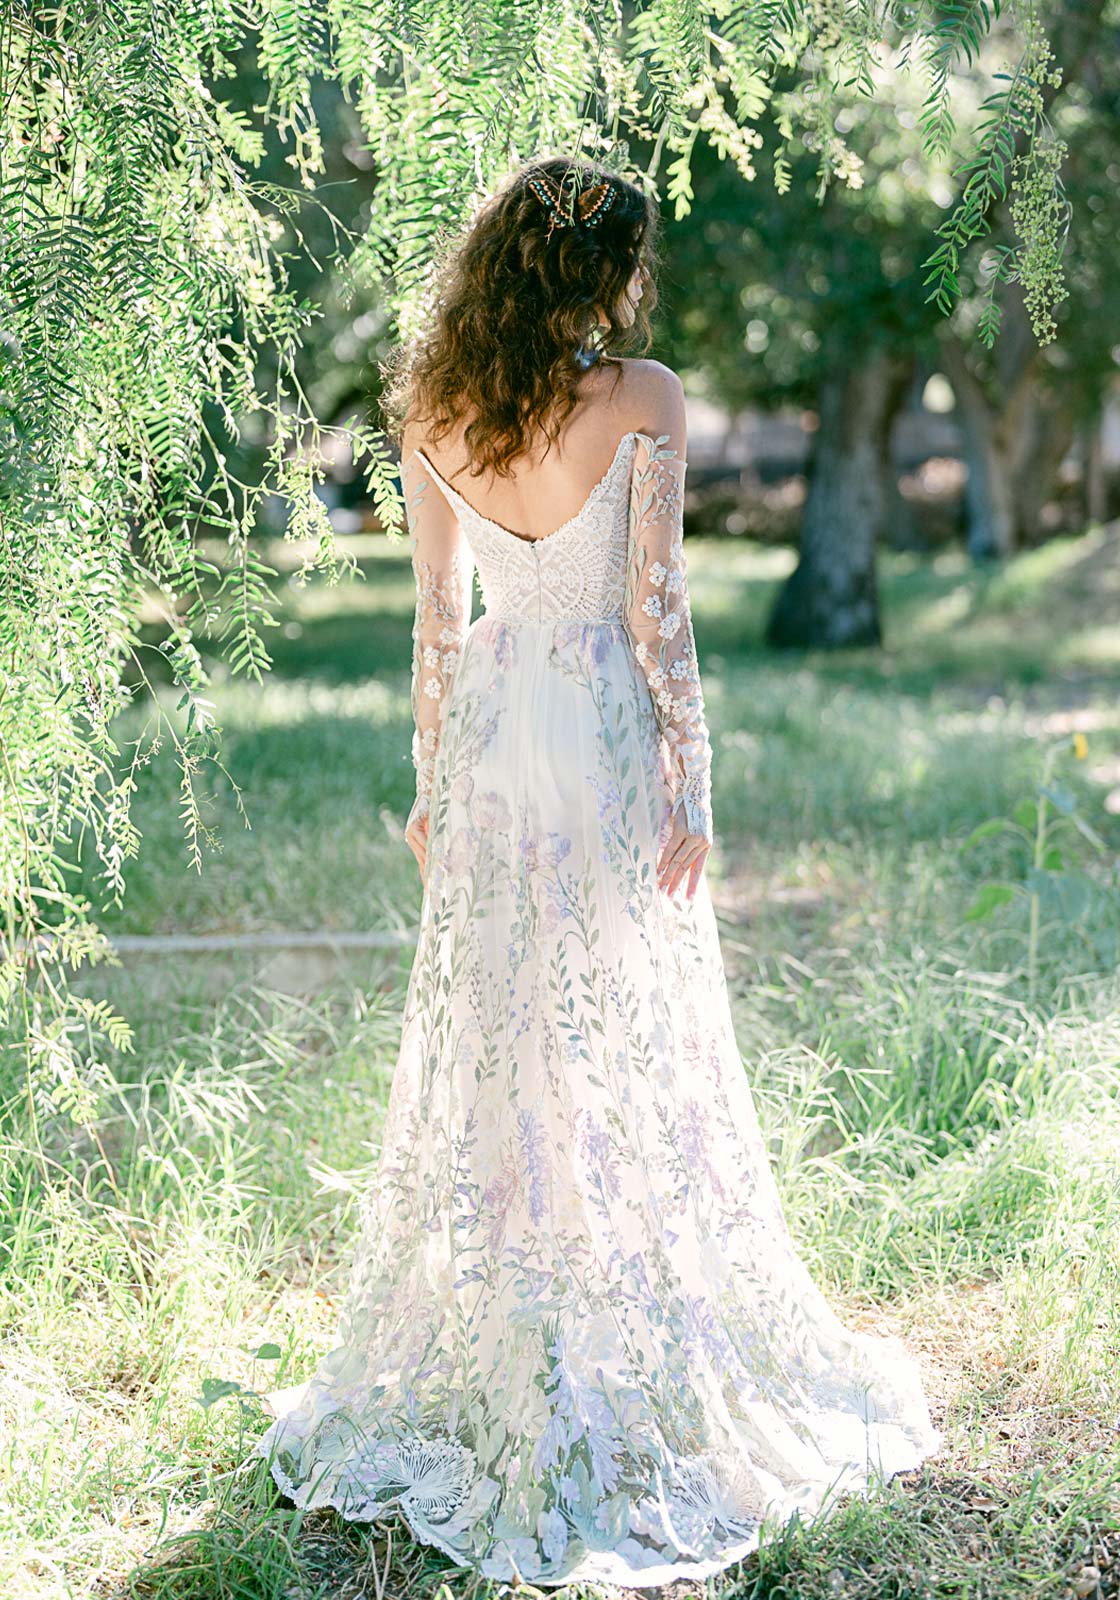 Colorful wedding dress Meadowsweet in romantic forest field.